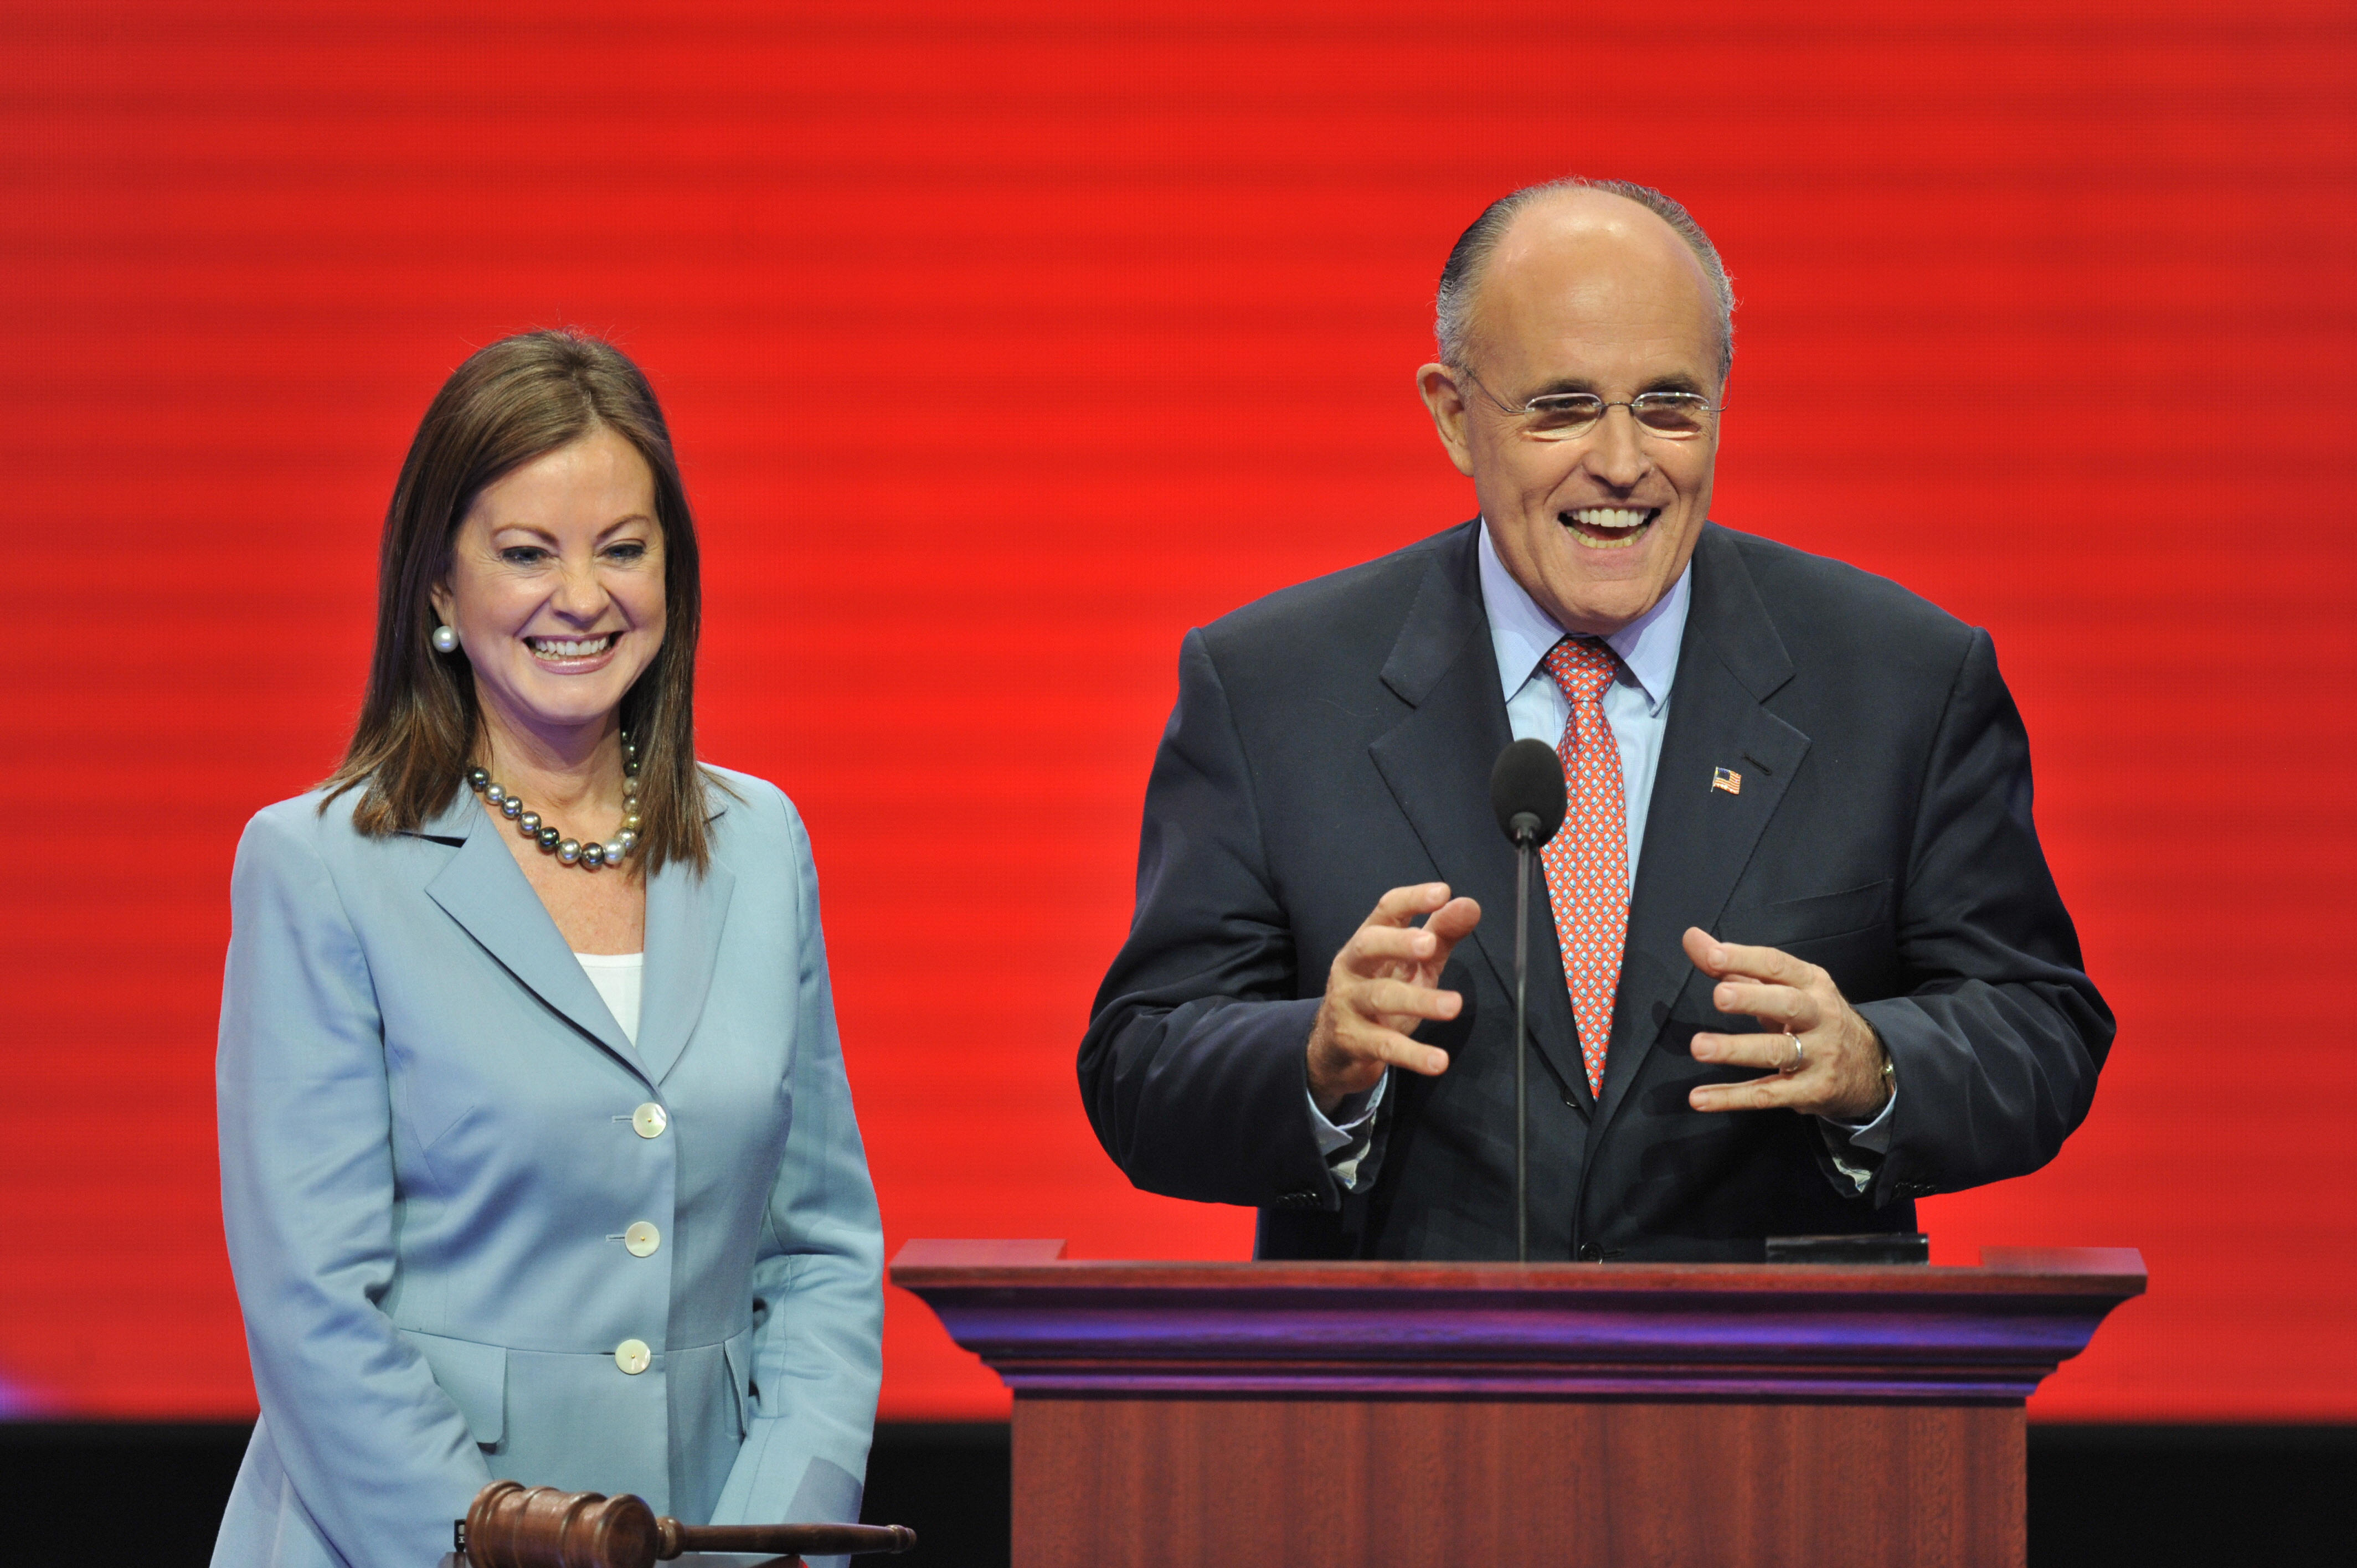 Rudy Giuliani and his wife Judith